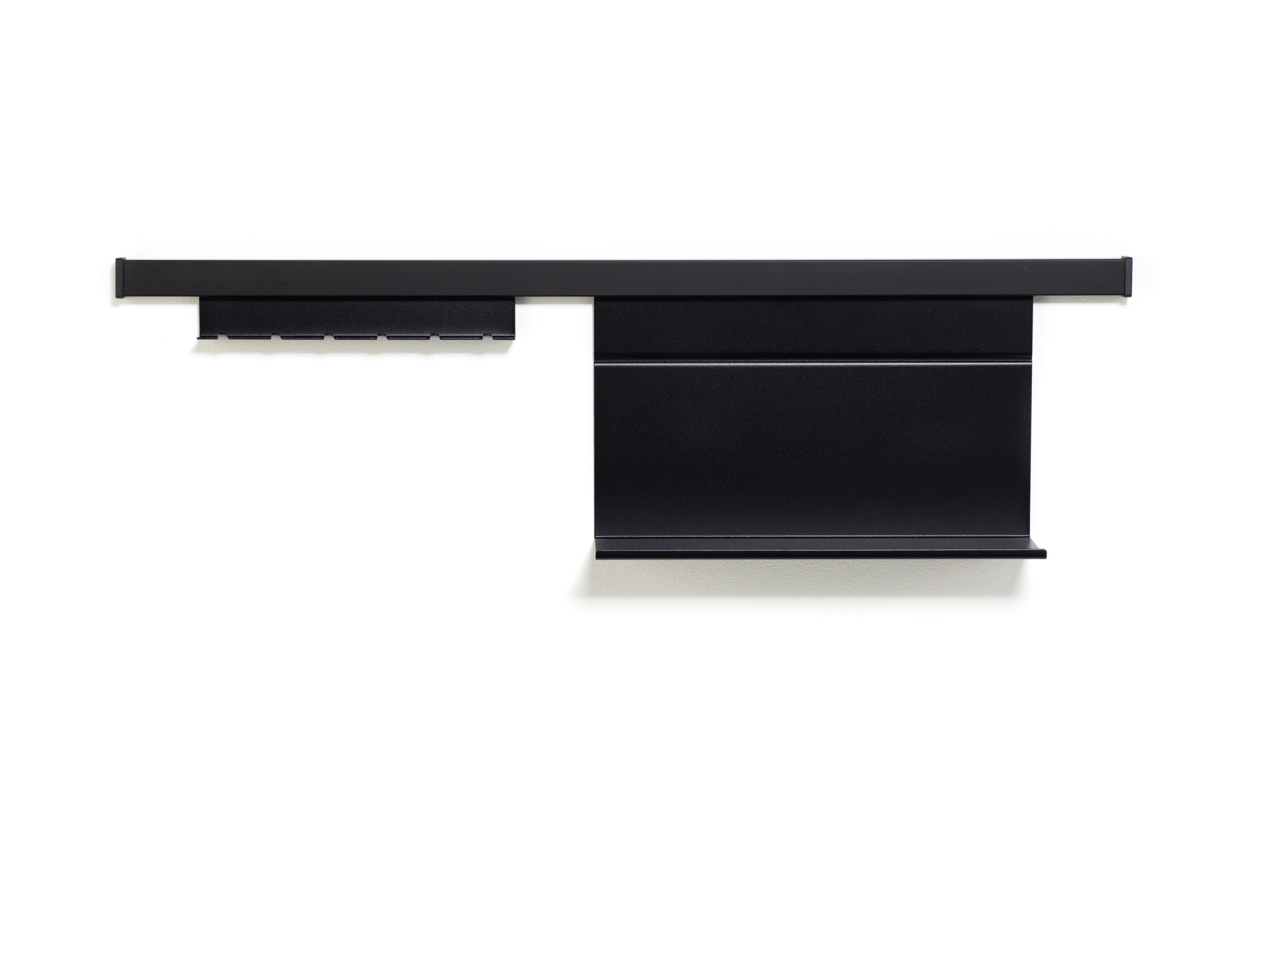  Linero EasyLine set-1, zwart mat